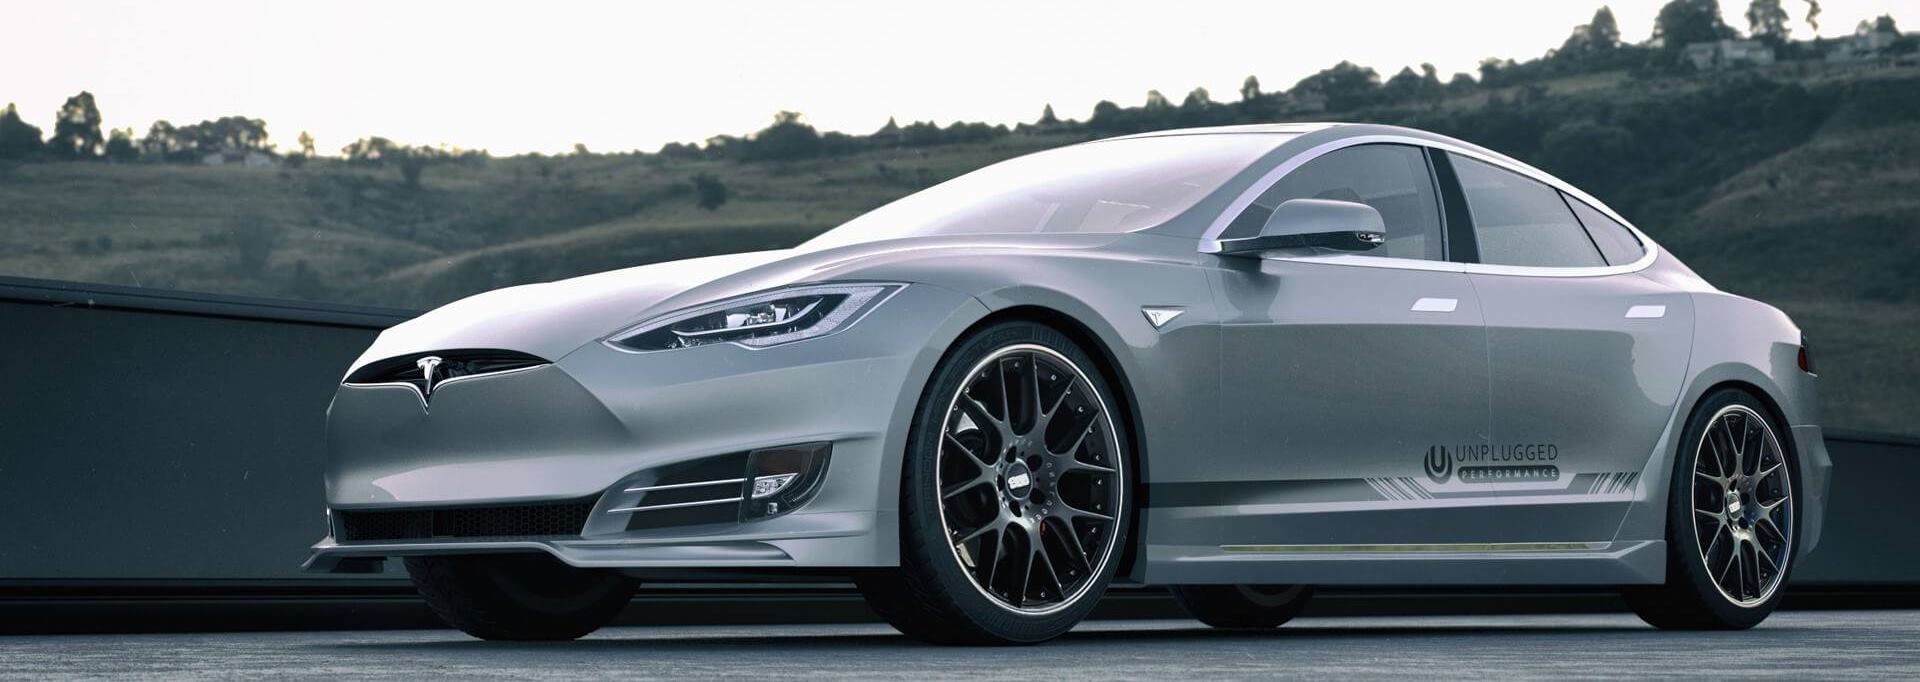 VIDEO: Tesla želi veću uključenost svojih zaposlenika